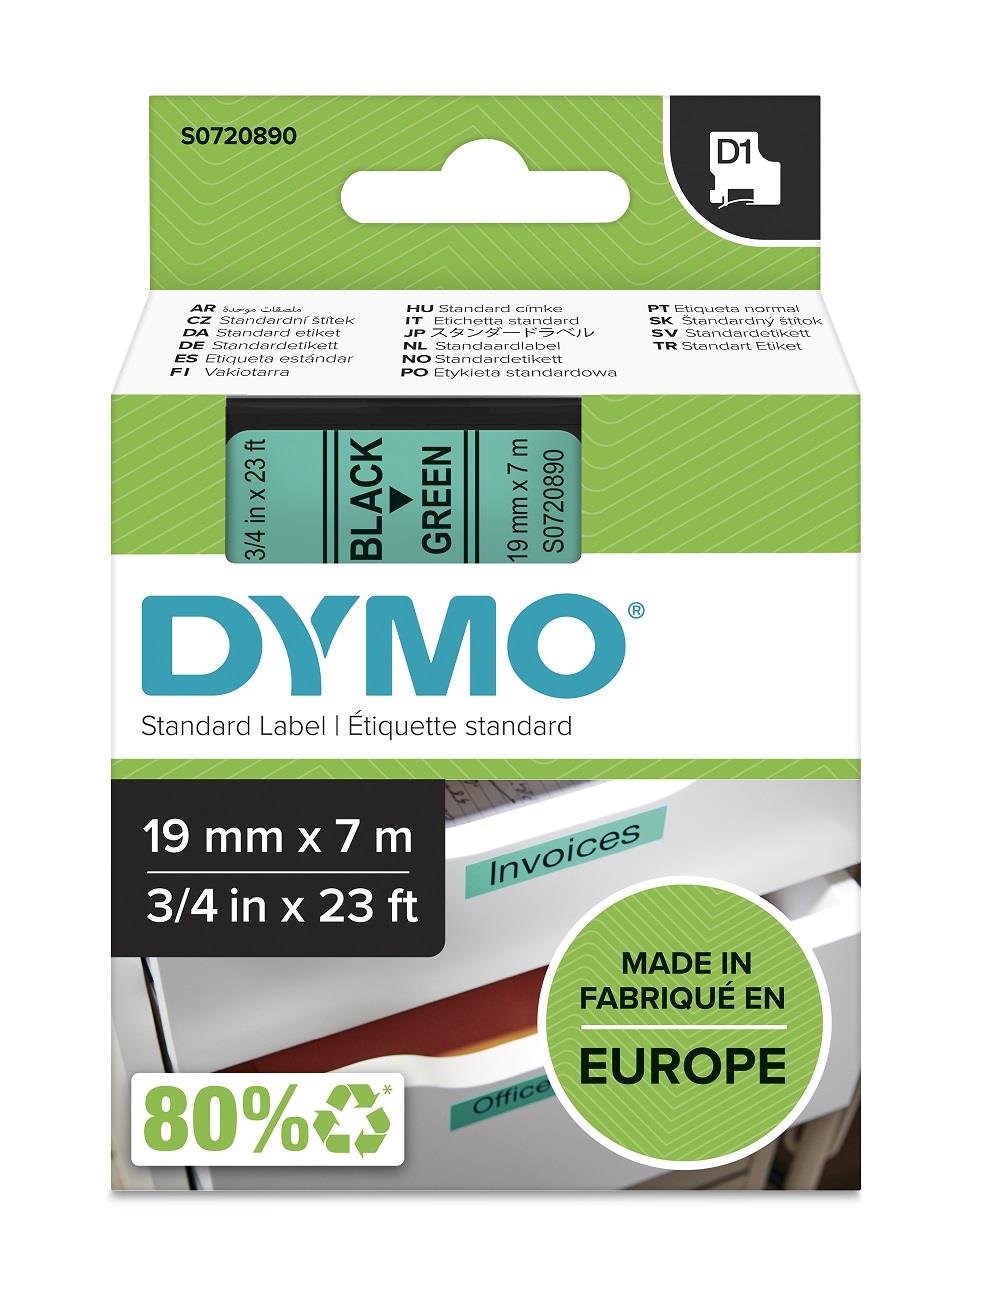 DYMO páska D1 19mm x 7m, černá na zelené, 45809, S0720890